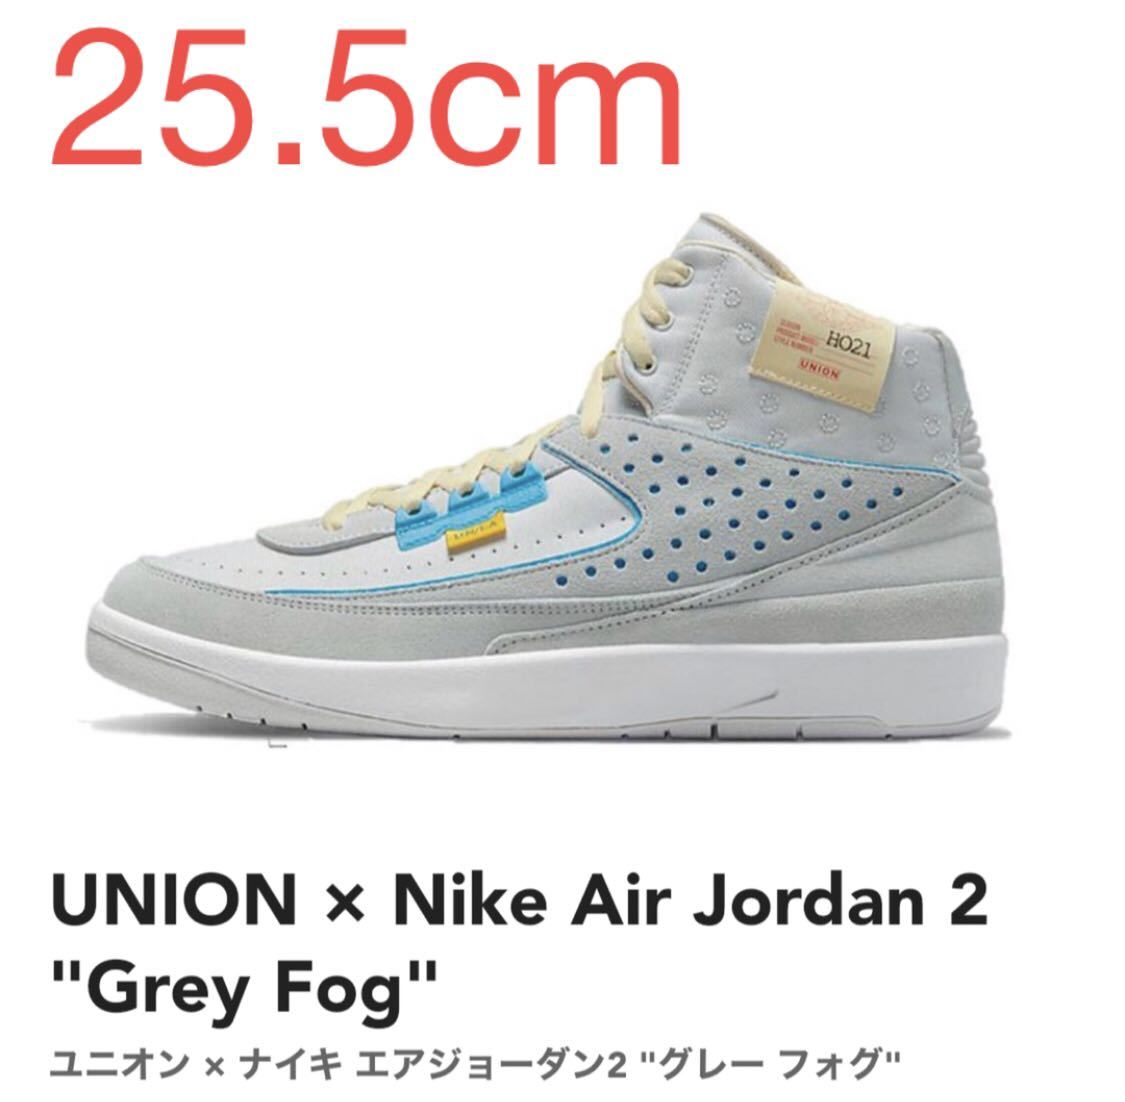 NION × Nike Air Jordan 2 Grey Fog ユニオン × ナイキ エアジョーダン2 グレー フォグ DN3802-001 25.5cm US7.5 新品 未使用